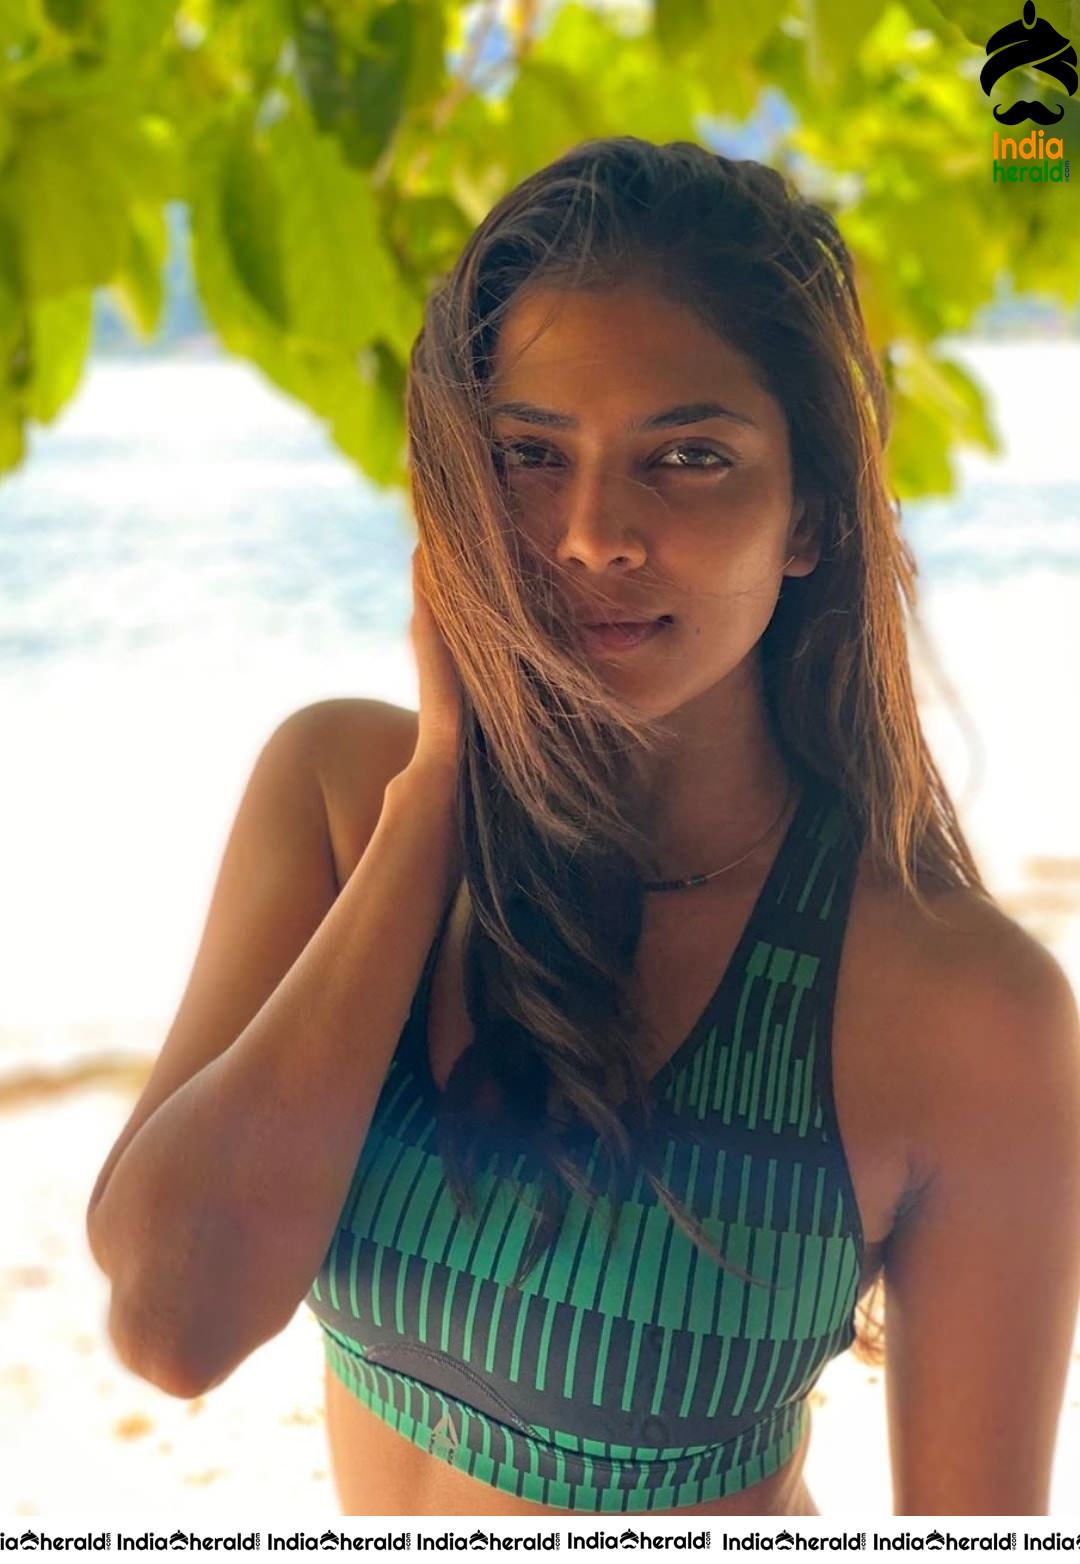 Stunning Malavika Mohanan from her trip to Seychelles